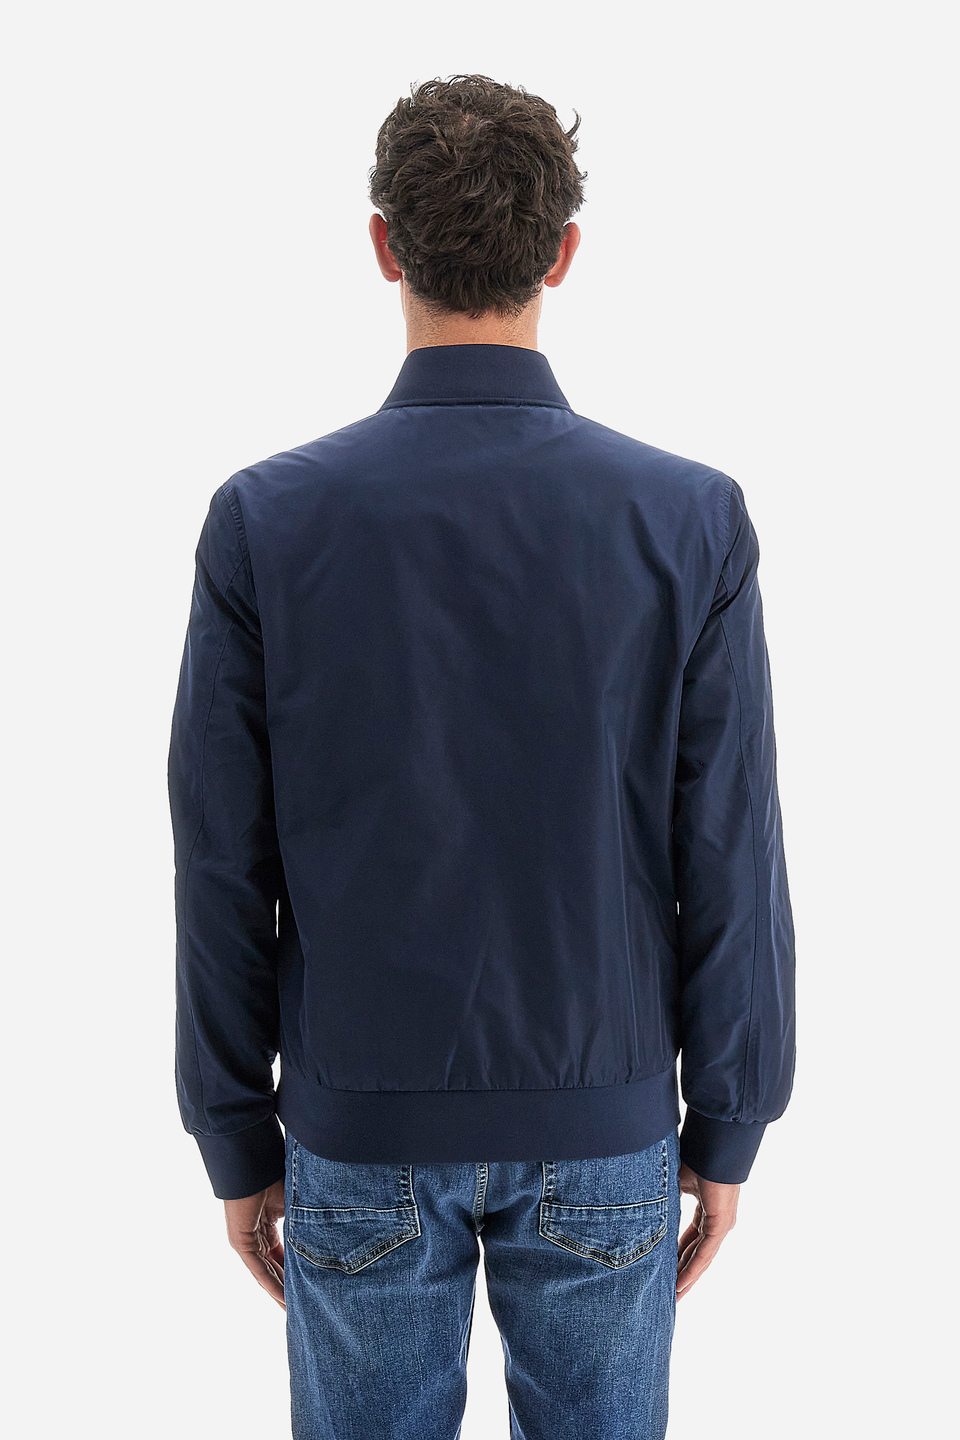 Men's regular fit zip up long sleeve jacket - Veit | La Martina - Official Online Shop